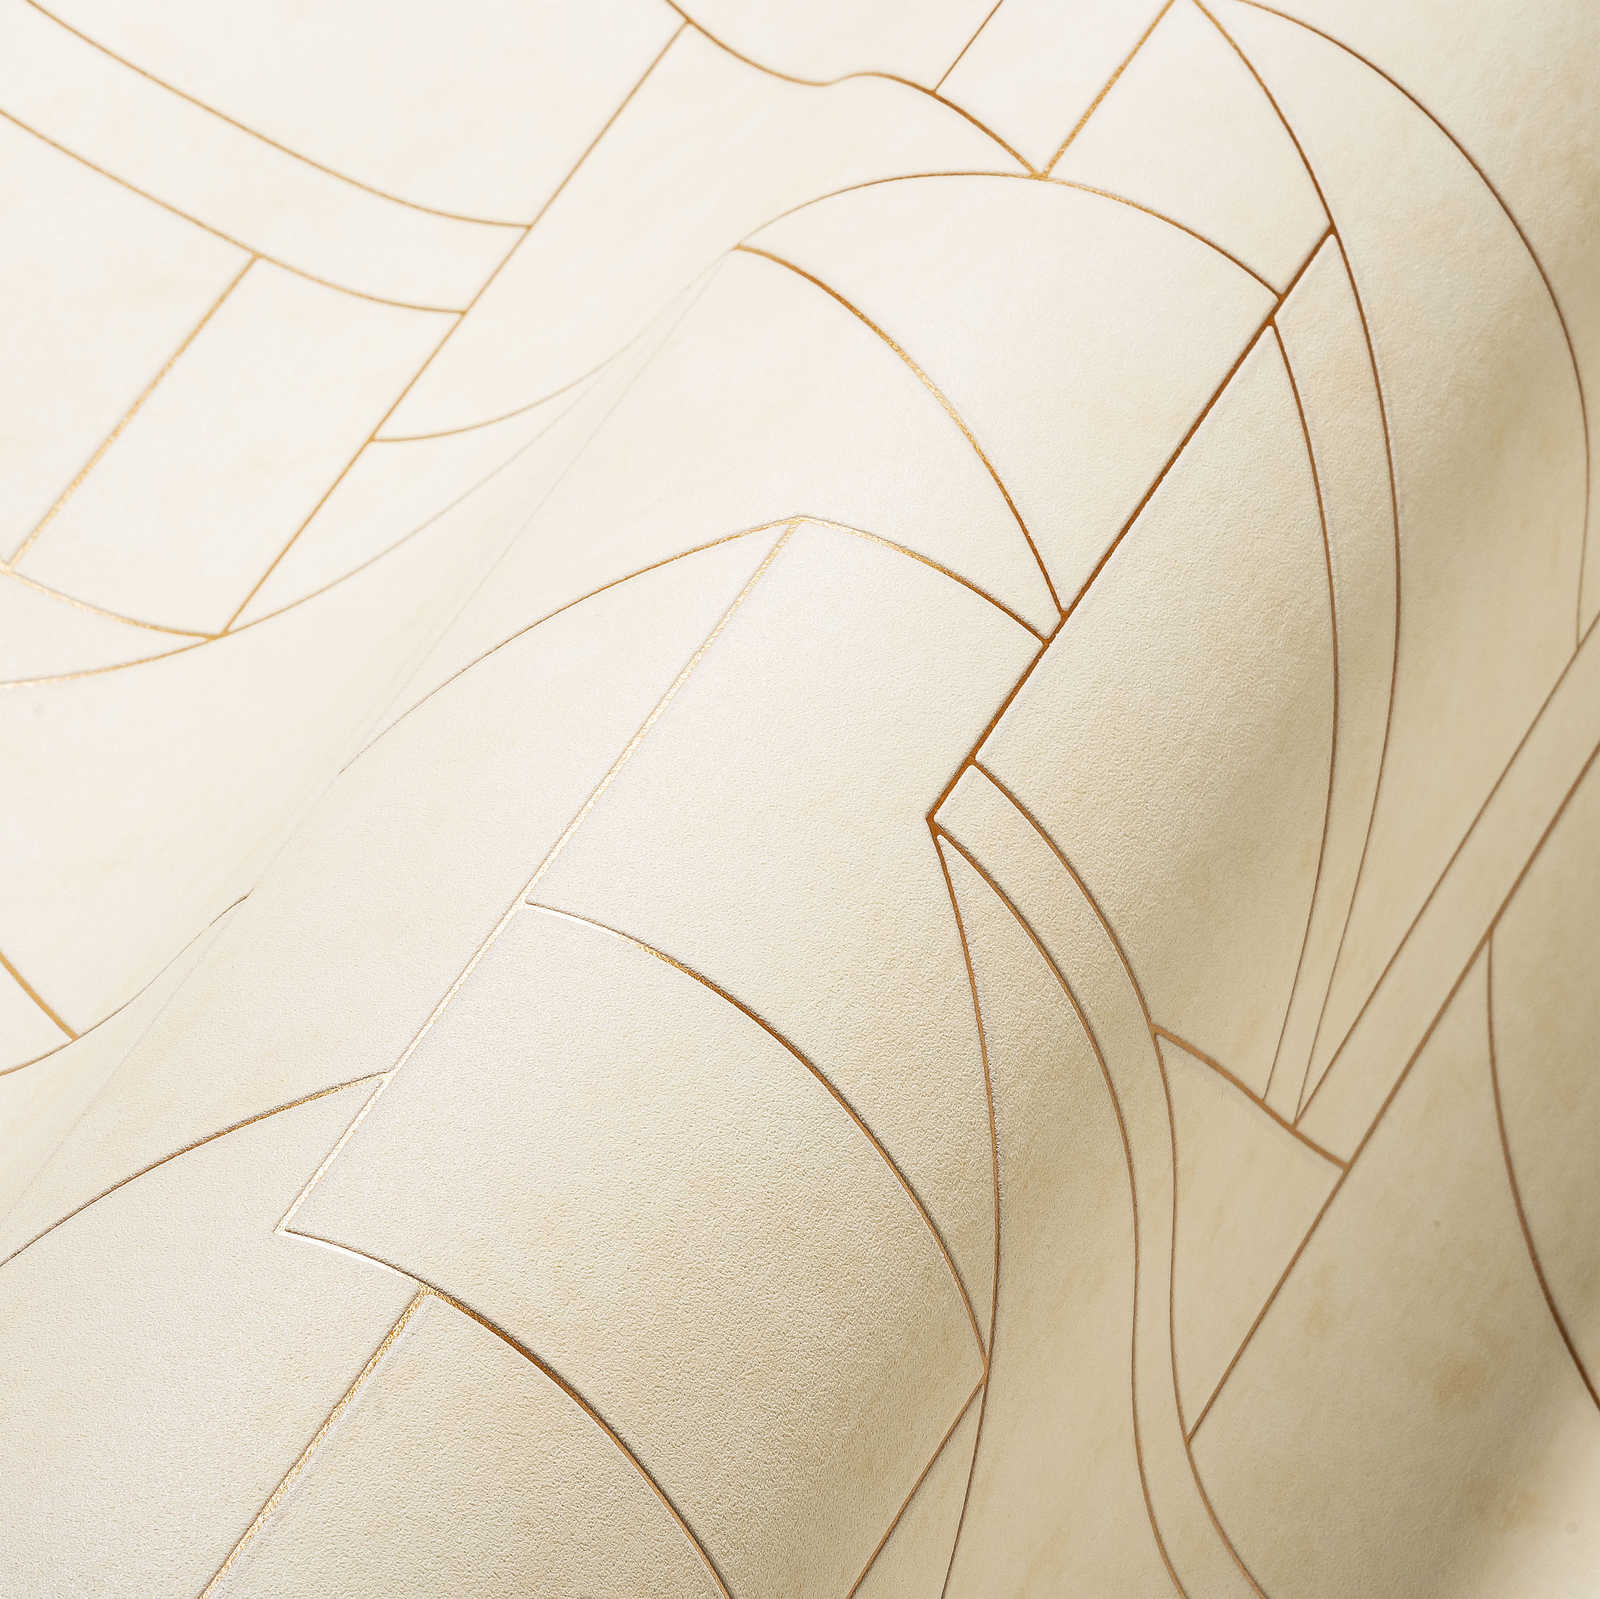             Graphic wallpaper with modern line pattern - white, cream, bronze
        